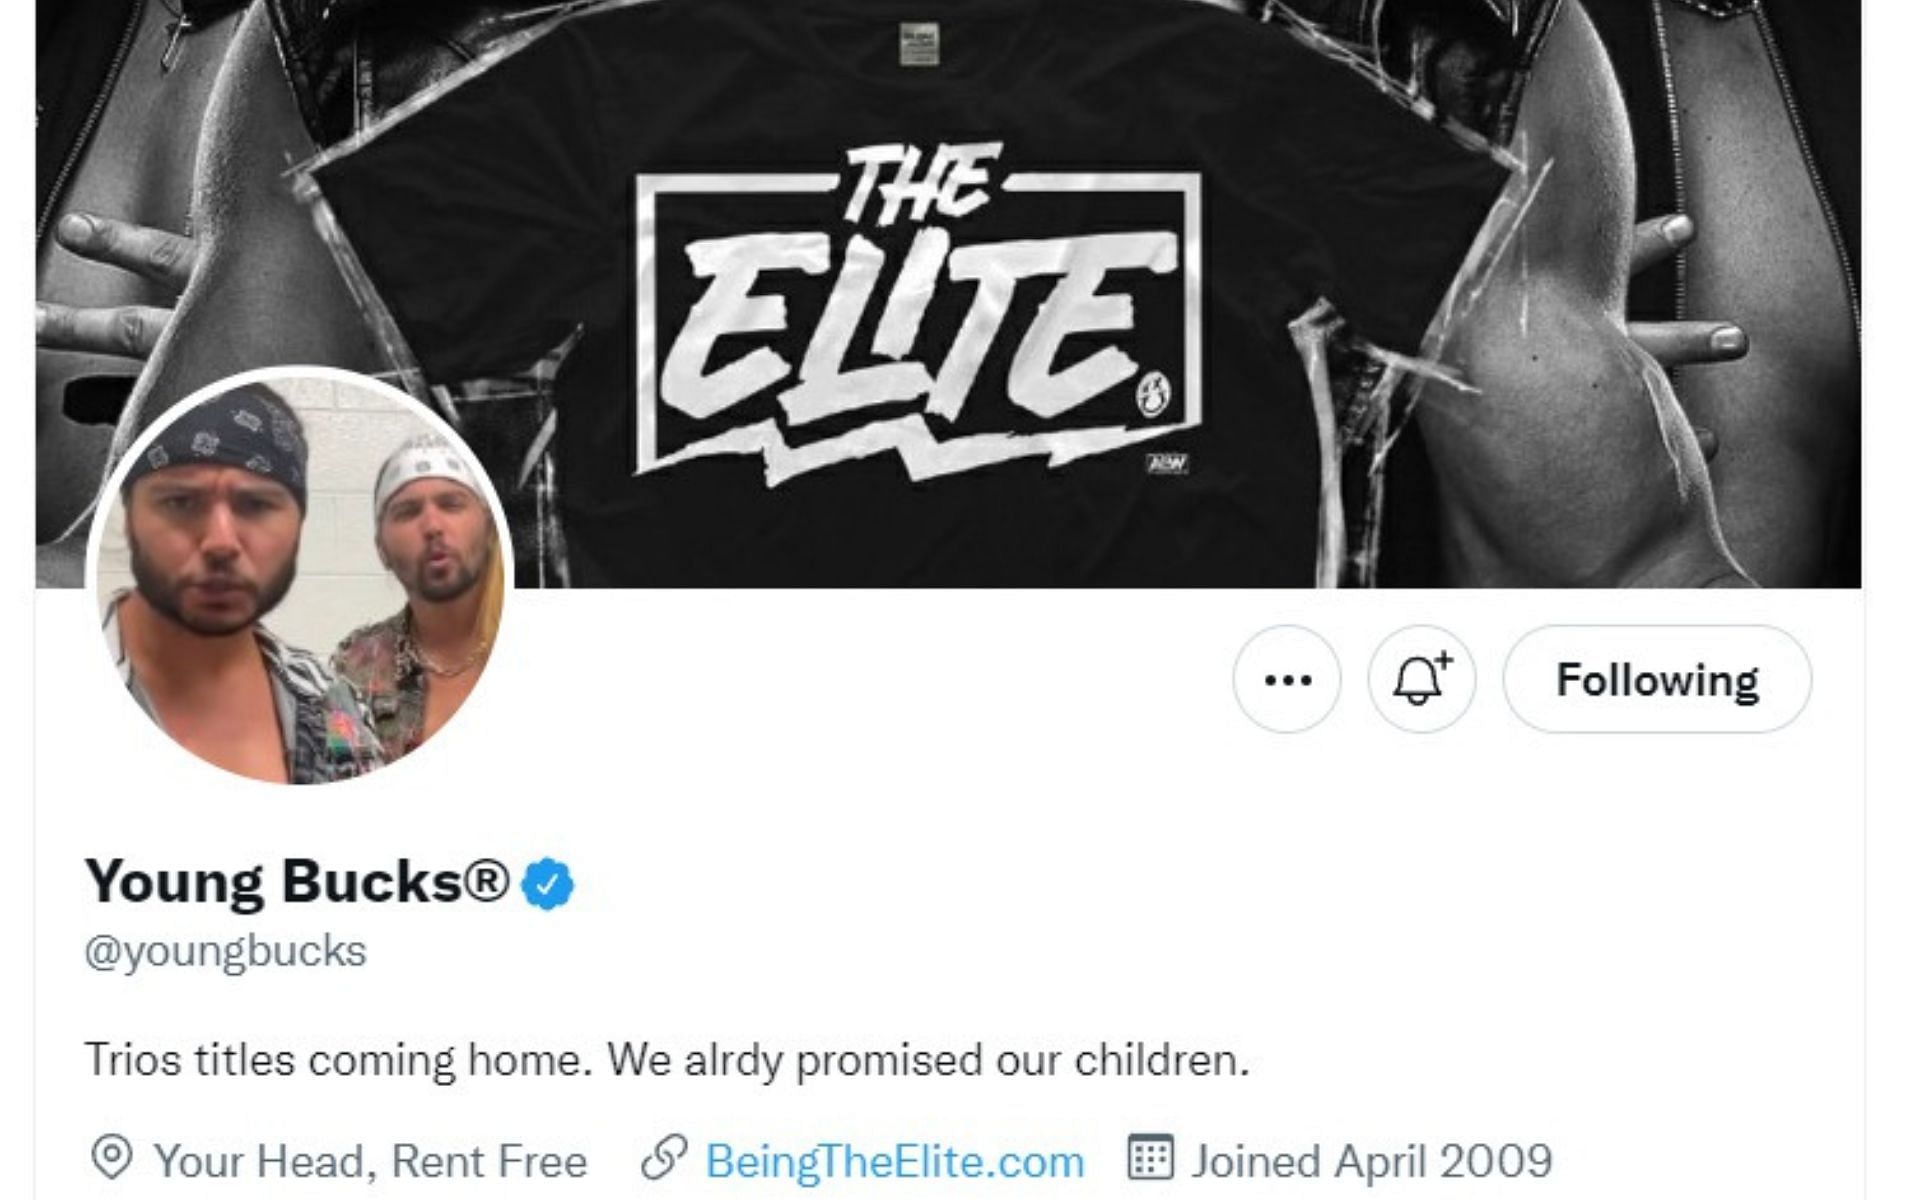 The updated Twitter bio of Young Bucks.